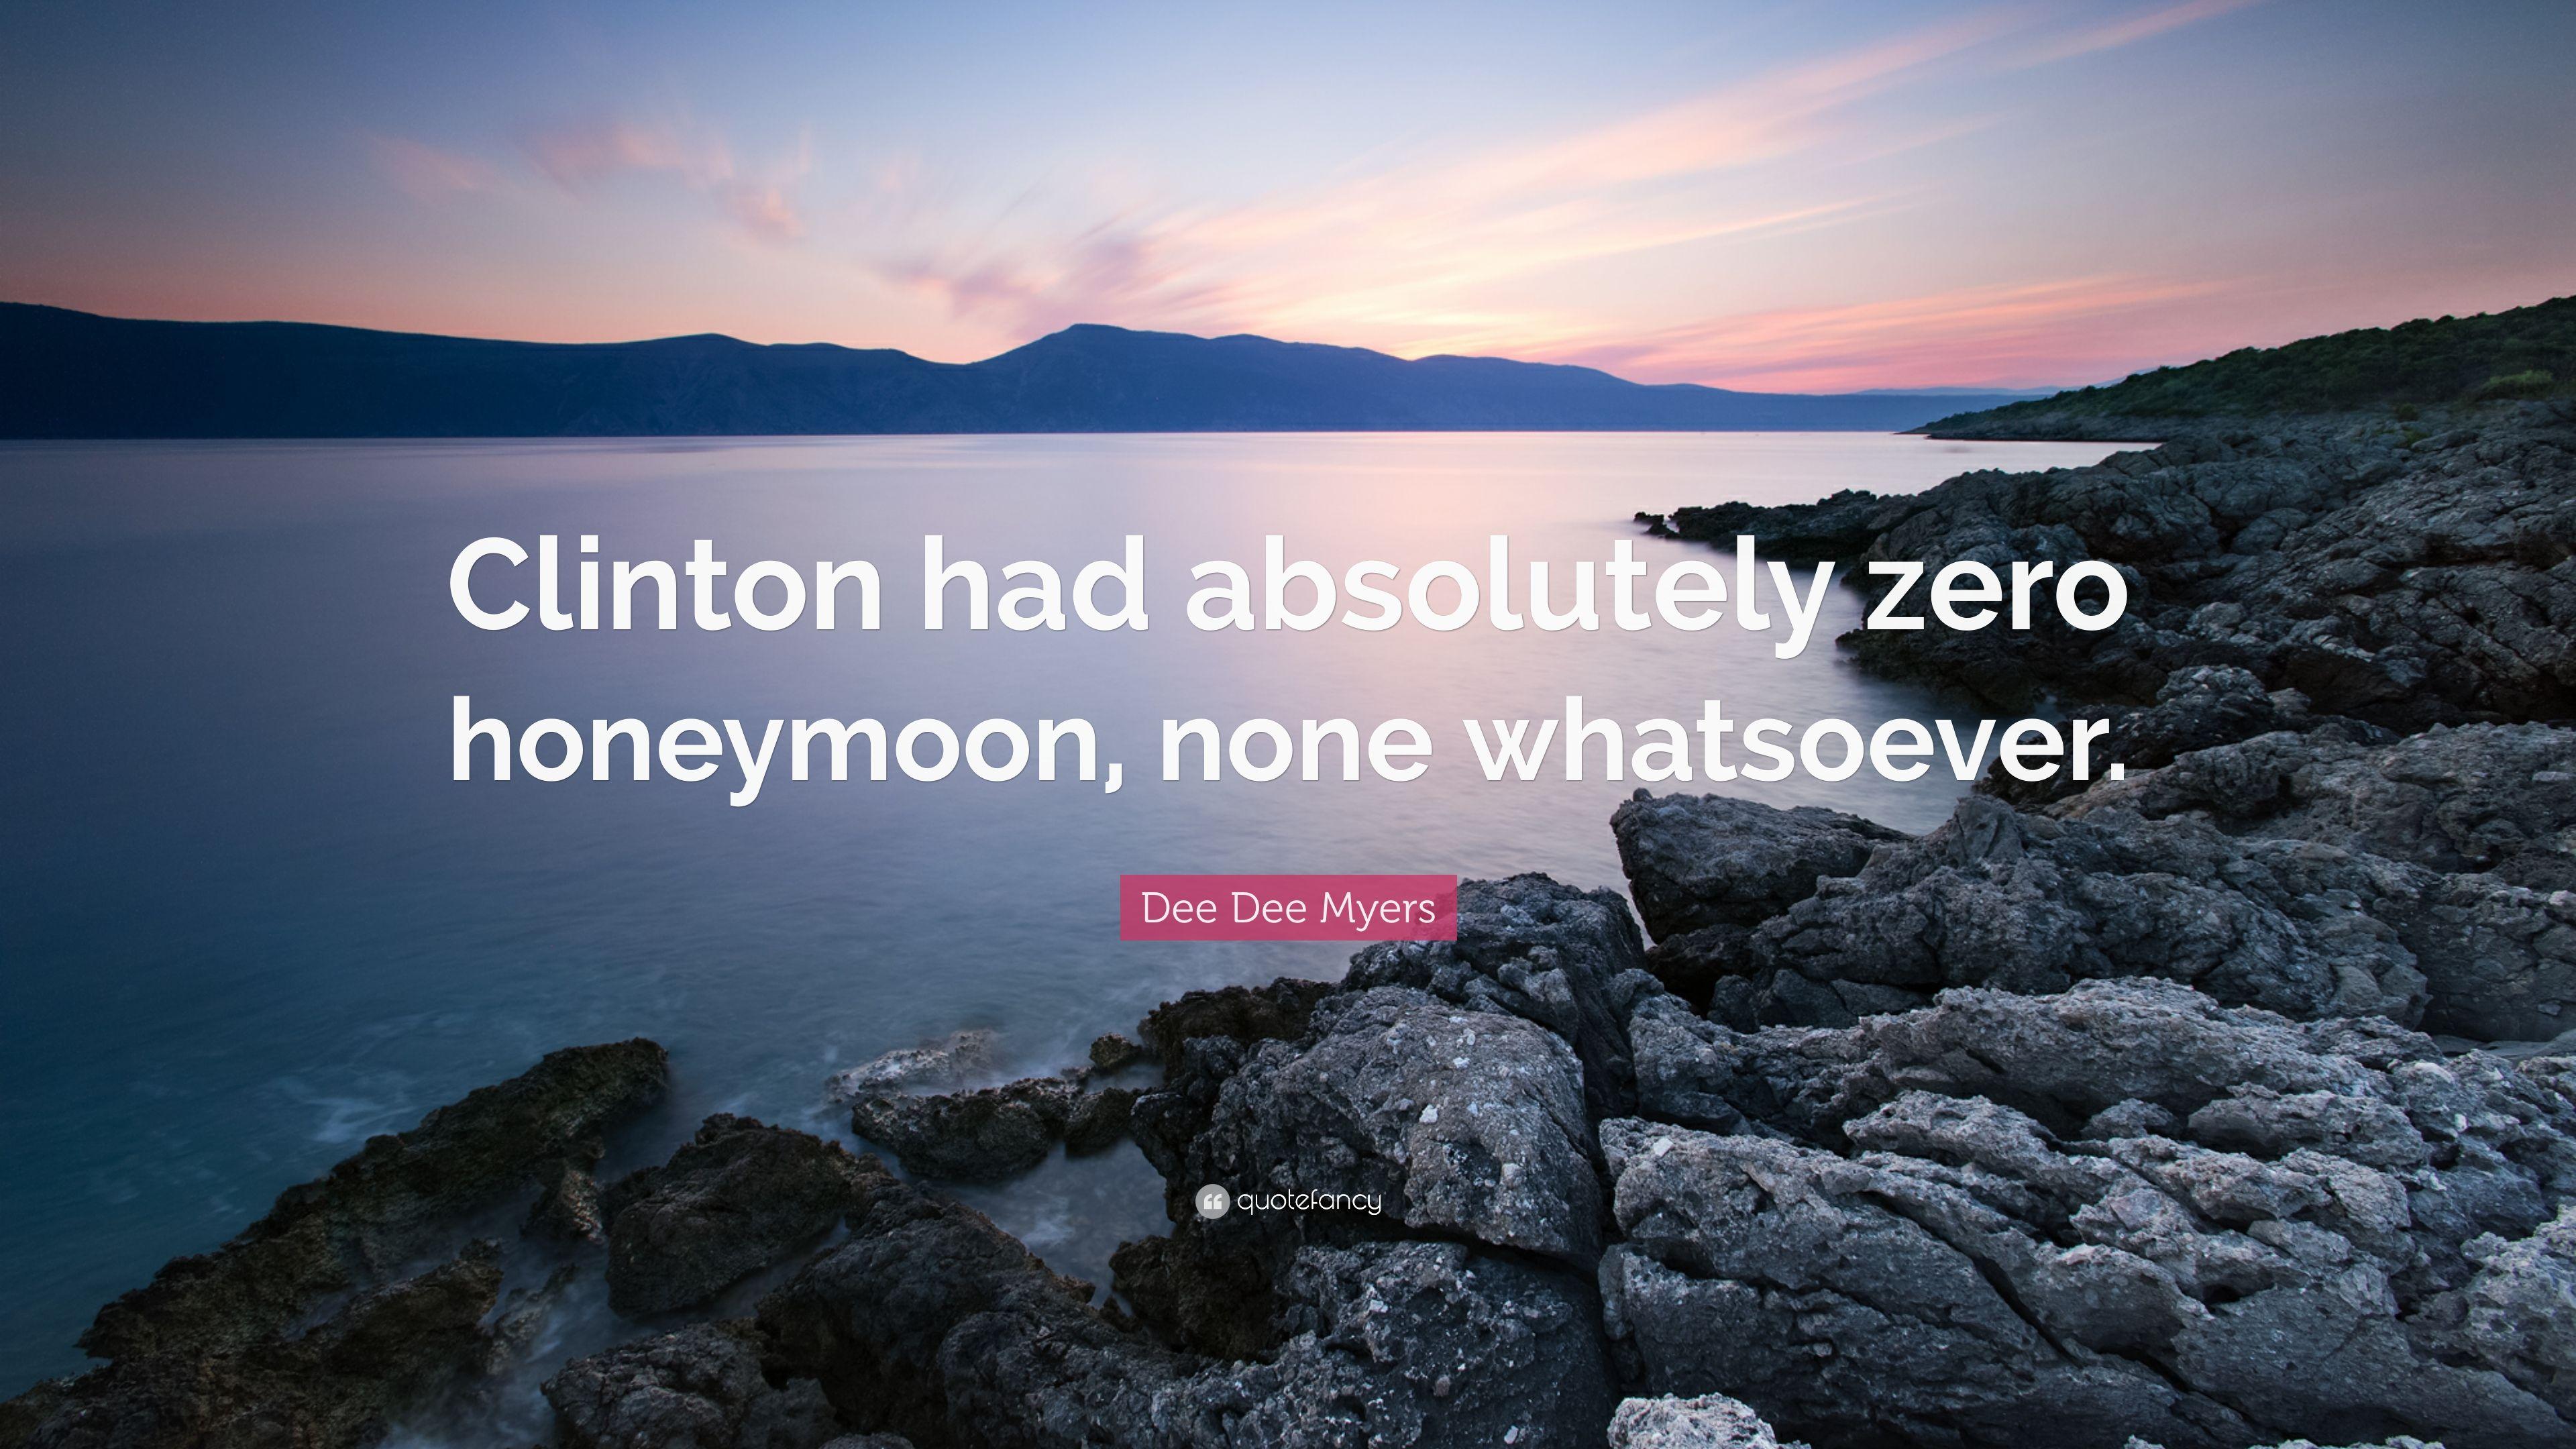 Dee Dee Myers Quote: “Clinton had absolutely zero honeymoon, none